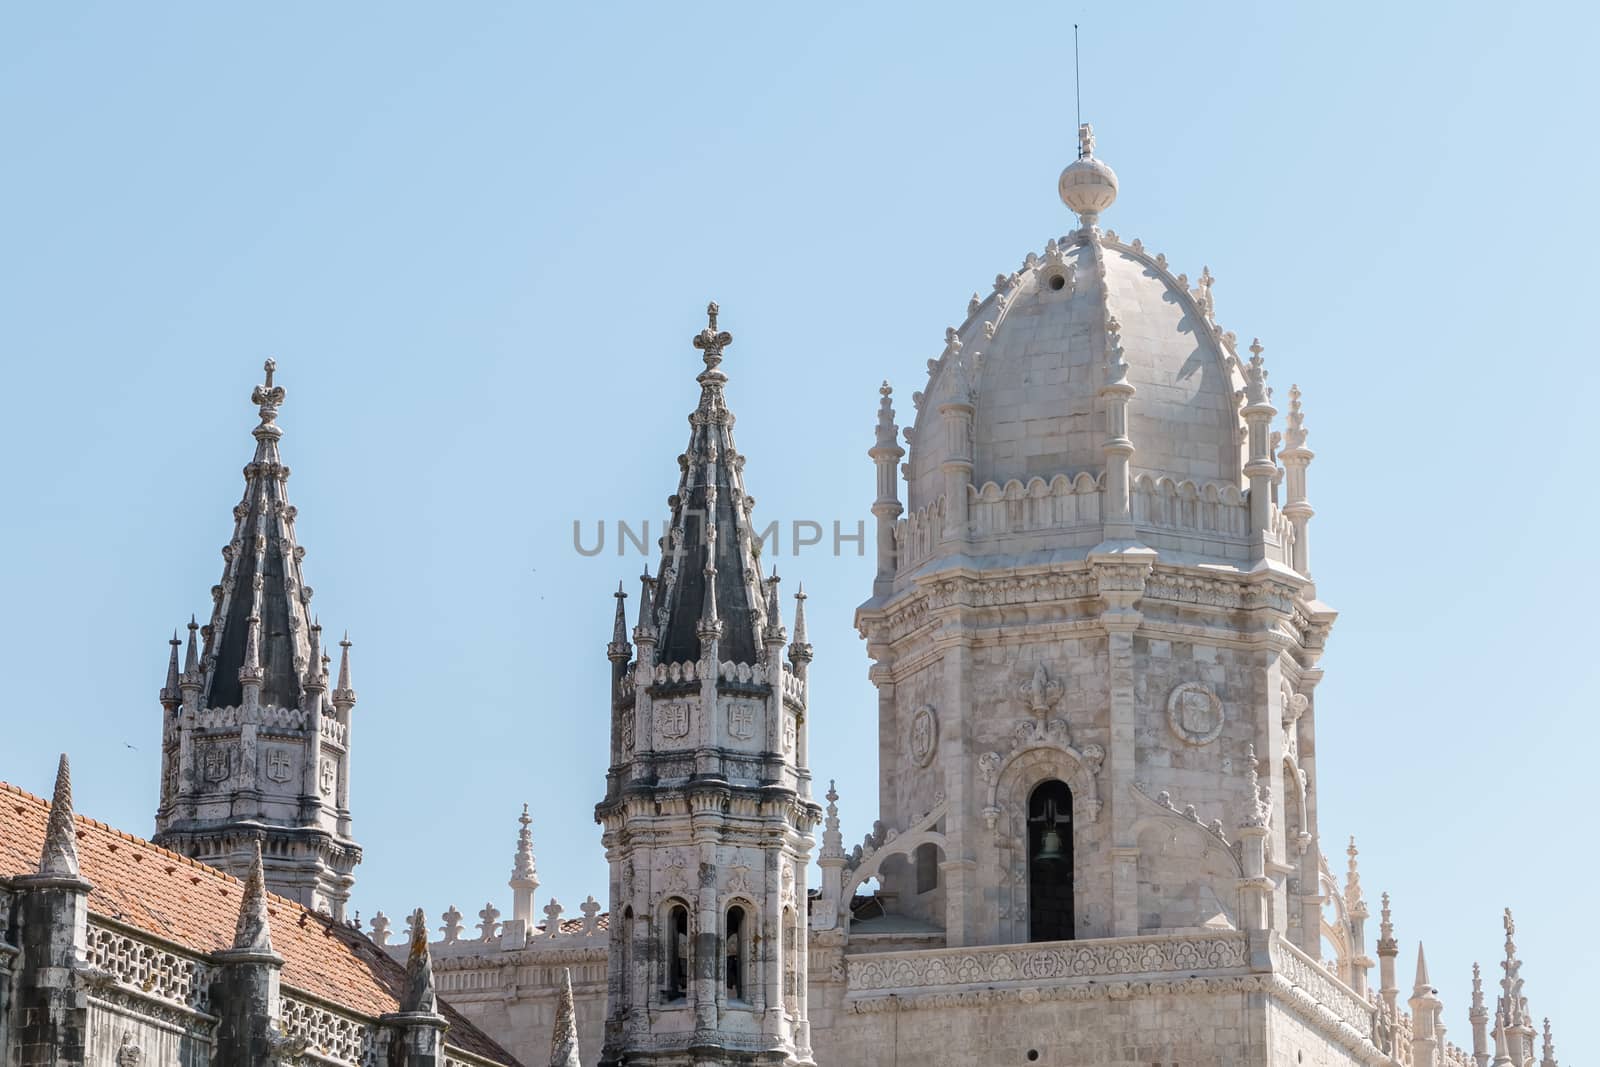 architectural detail of the holy mary church of Belem (Igreja de Santa Maria de Belem) in Lisbon, Portugal